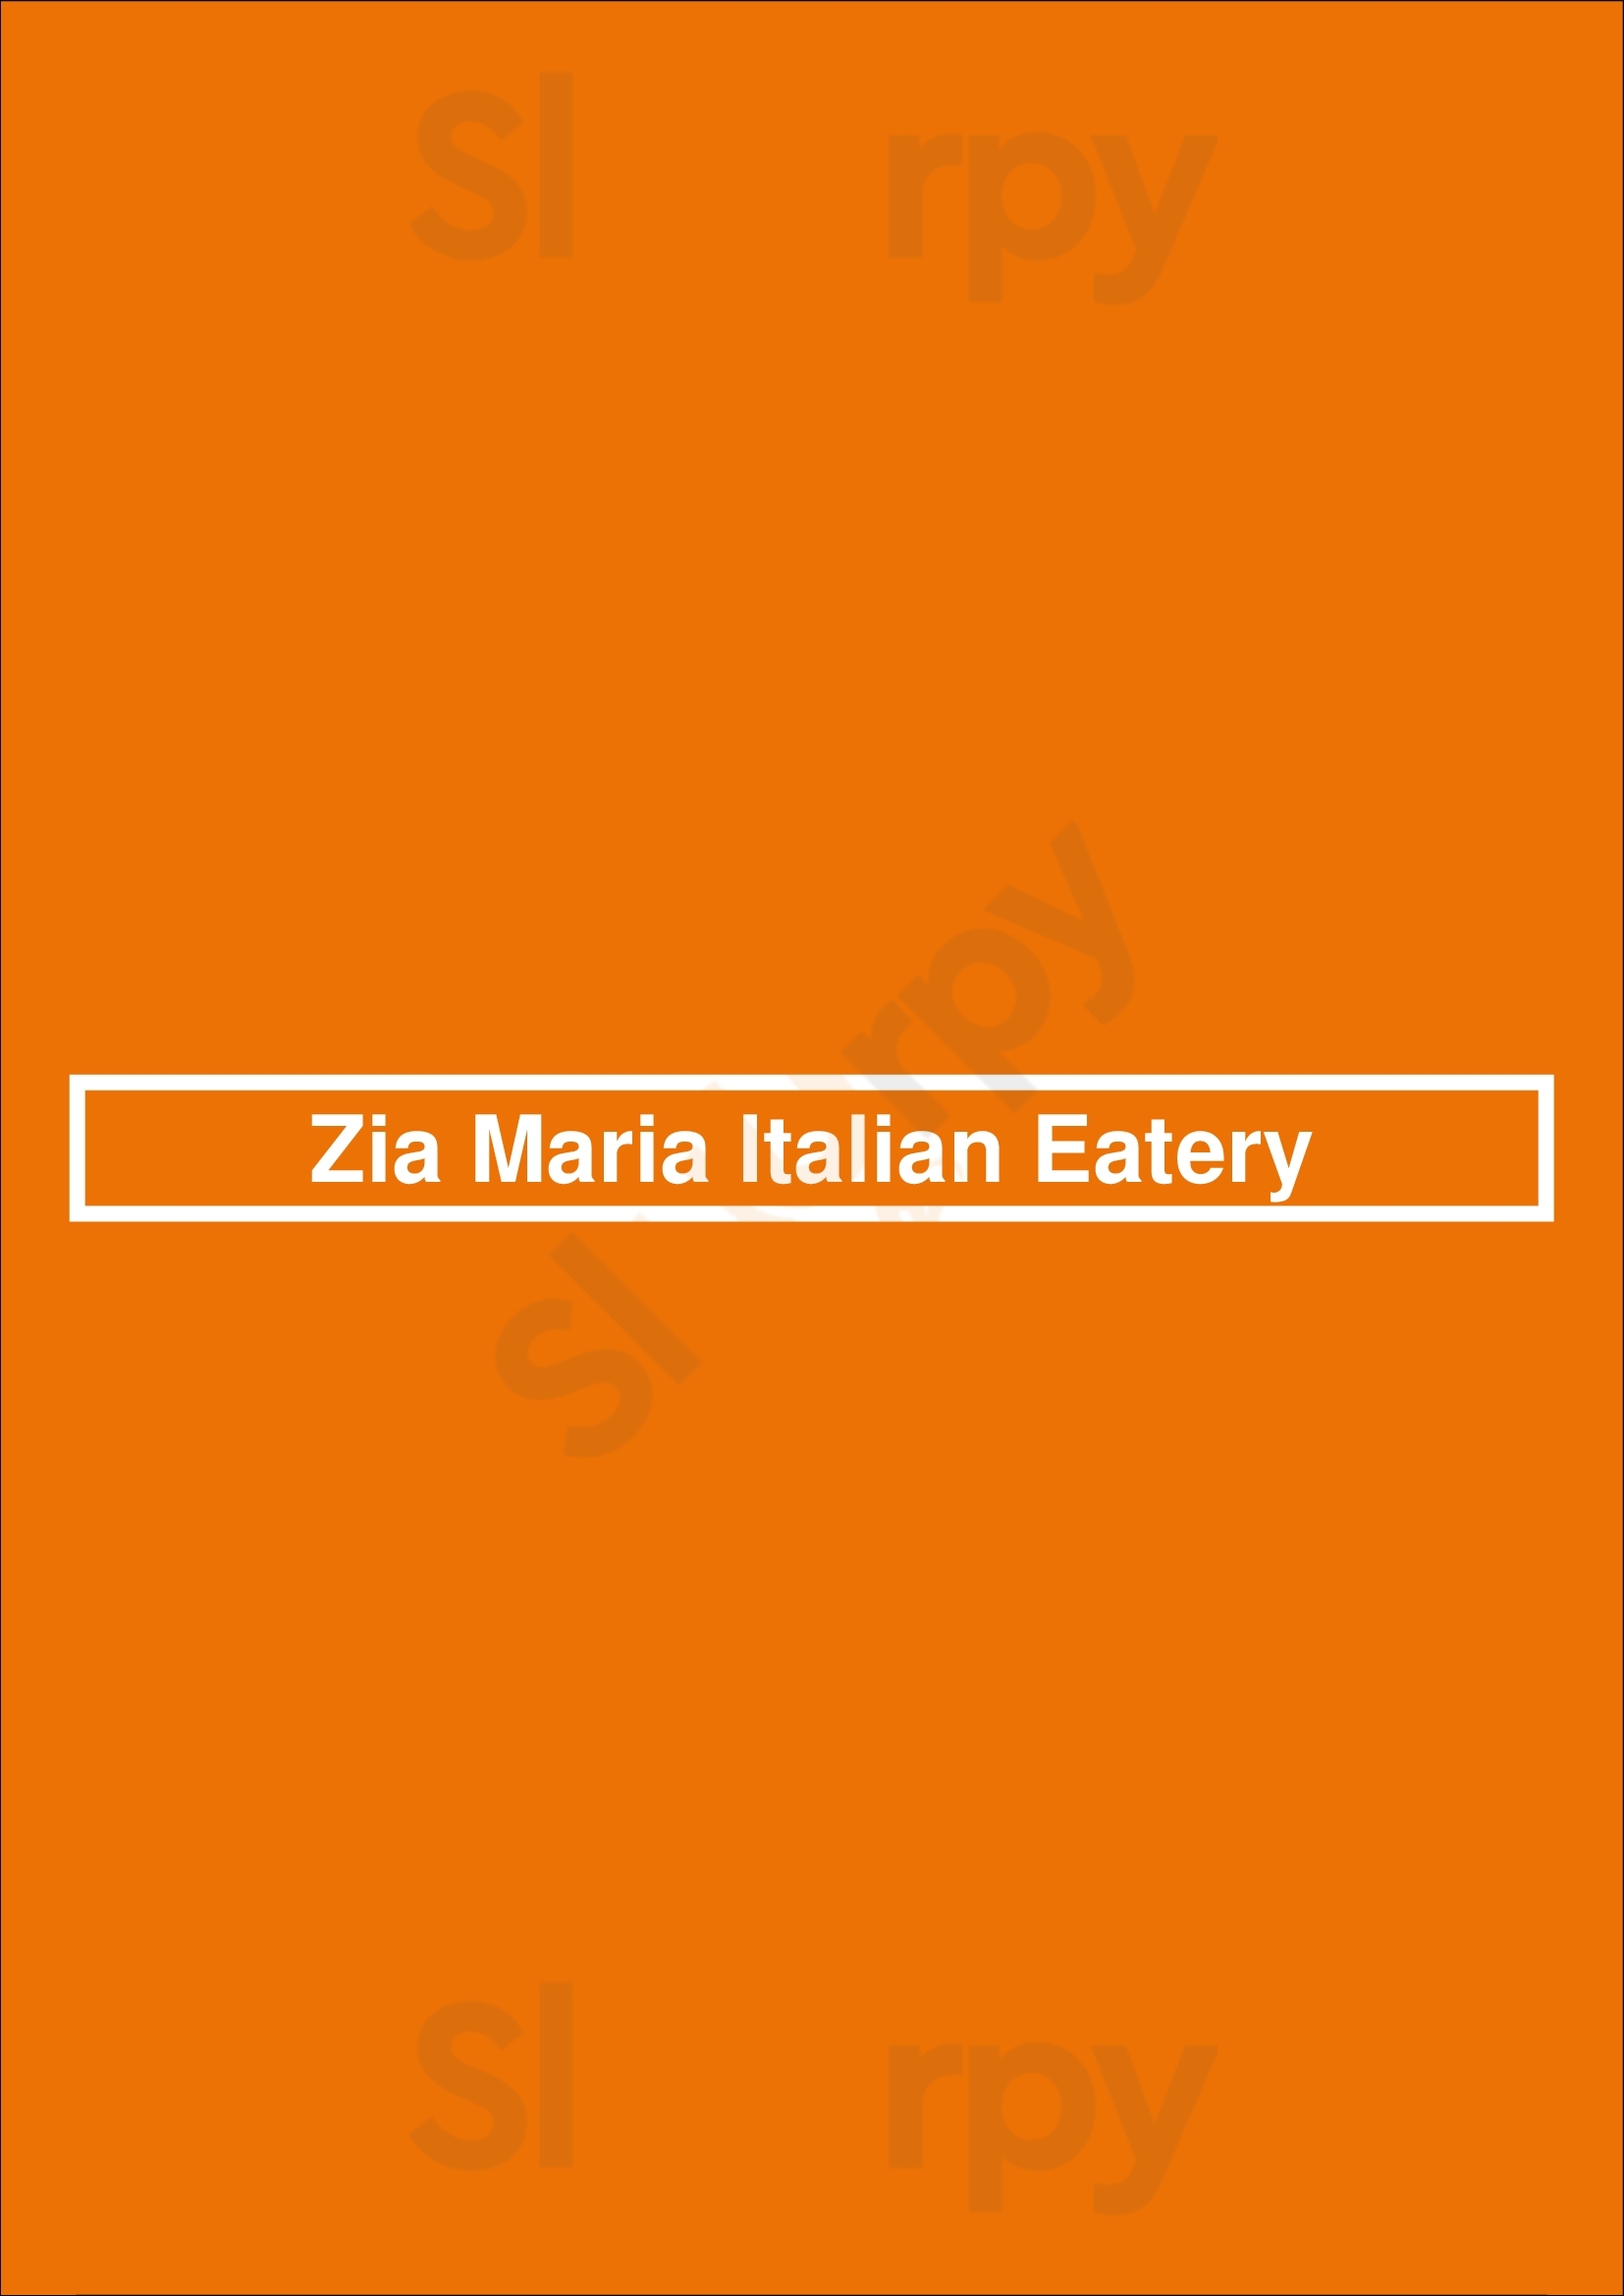 Zia Maria Italian Eatery Denver Menu - 1